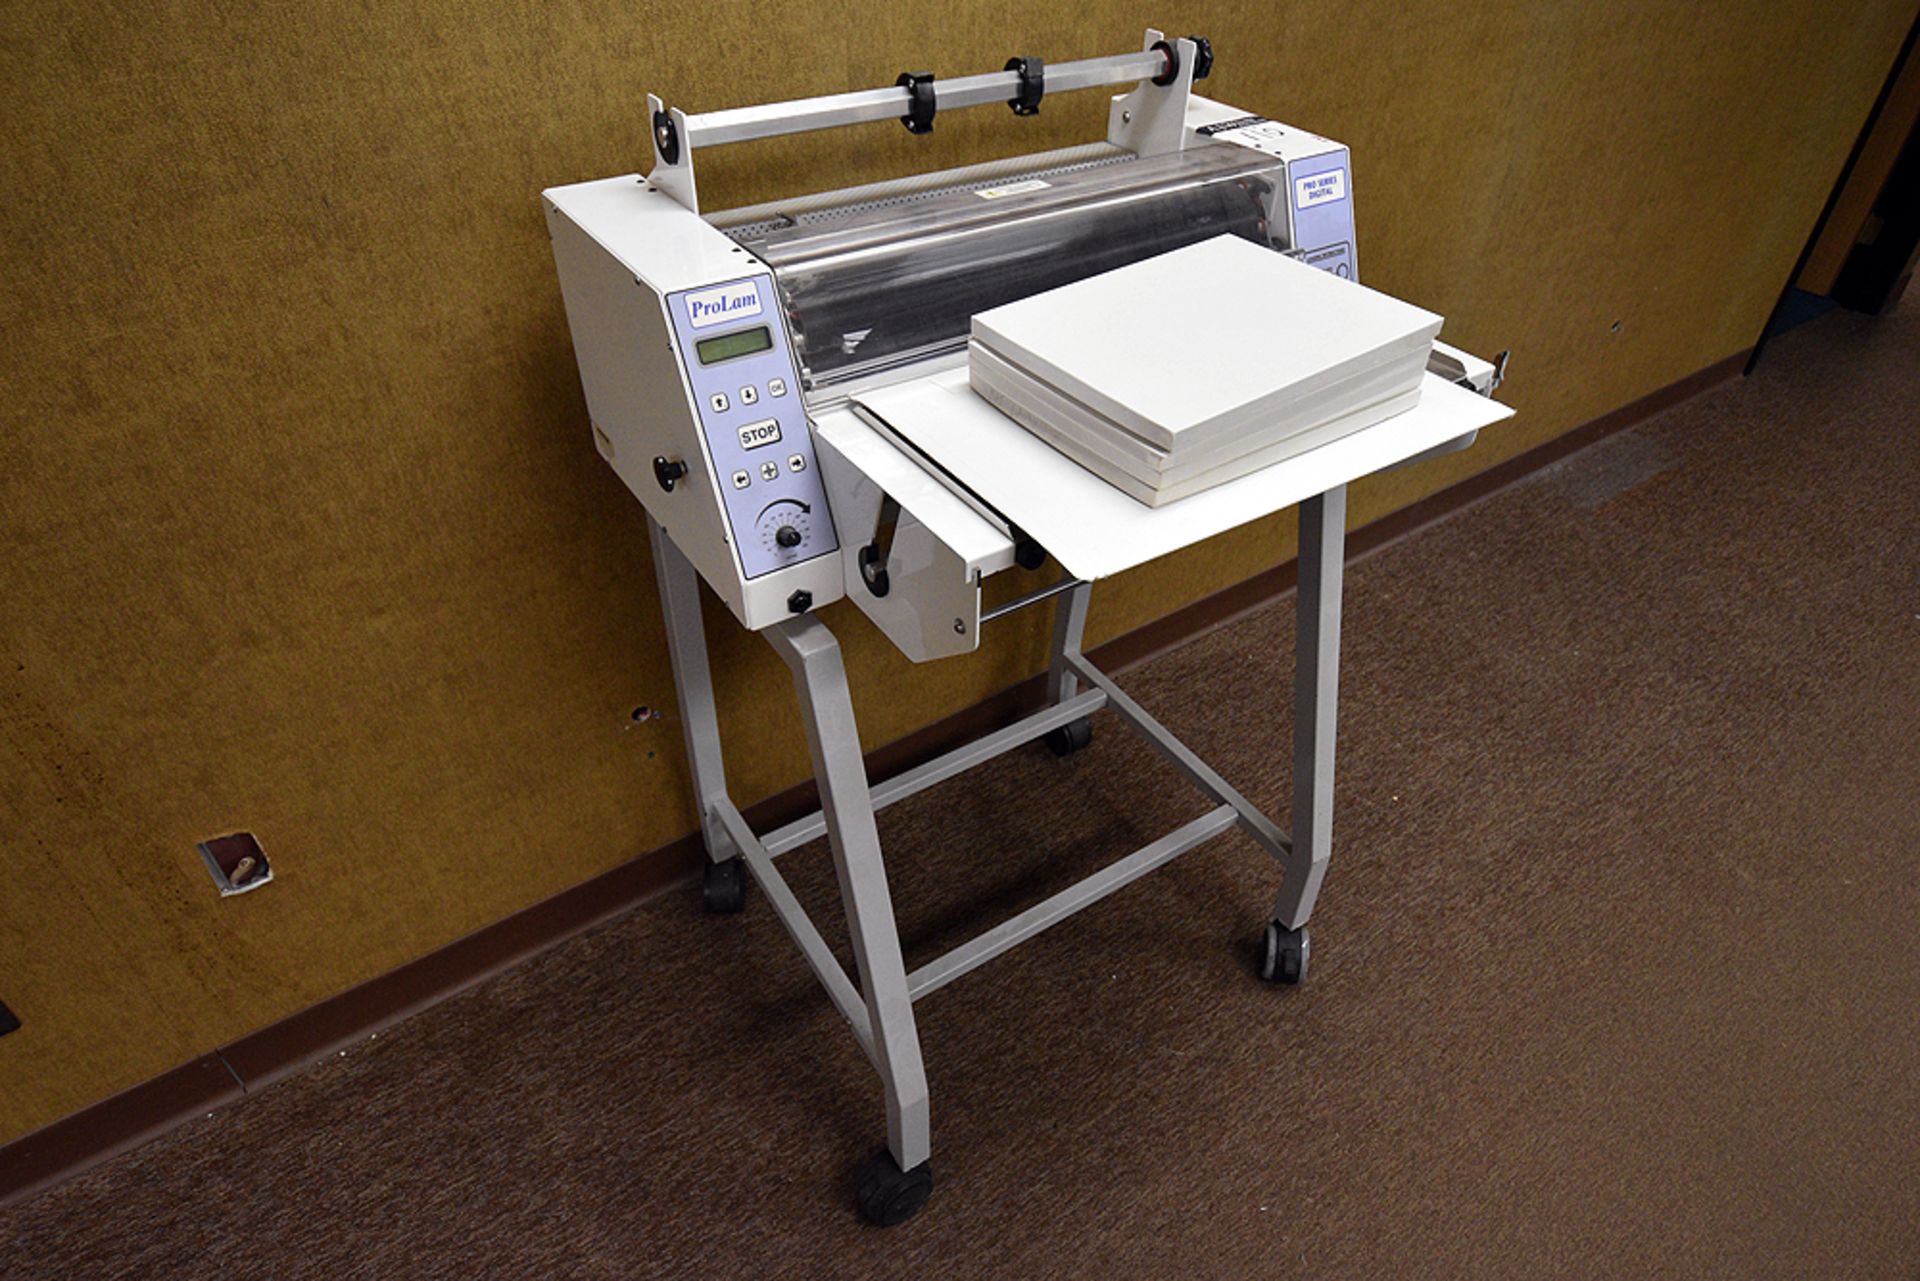 Pro-Lam Pro Series digital laminator, 21” wide w/ portable stand - Image 2 of 2